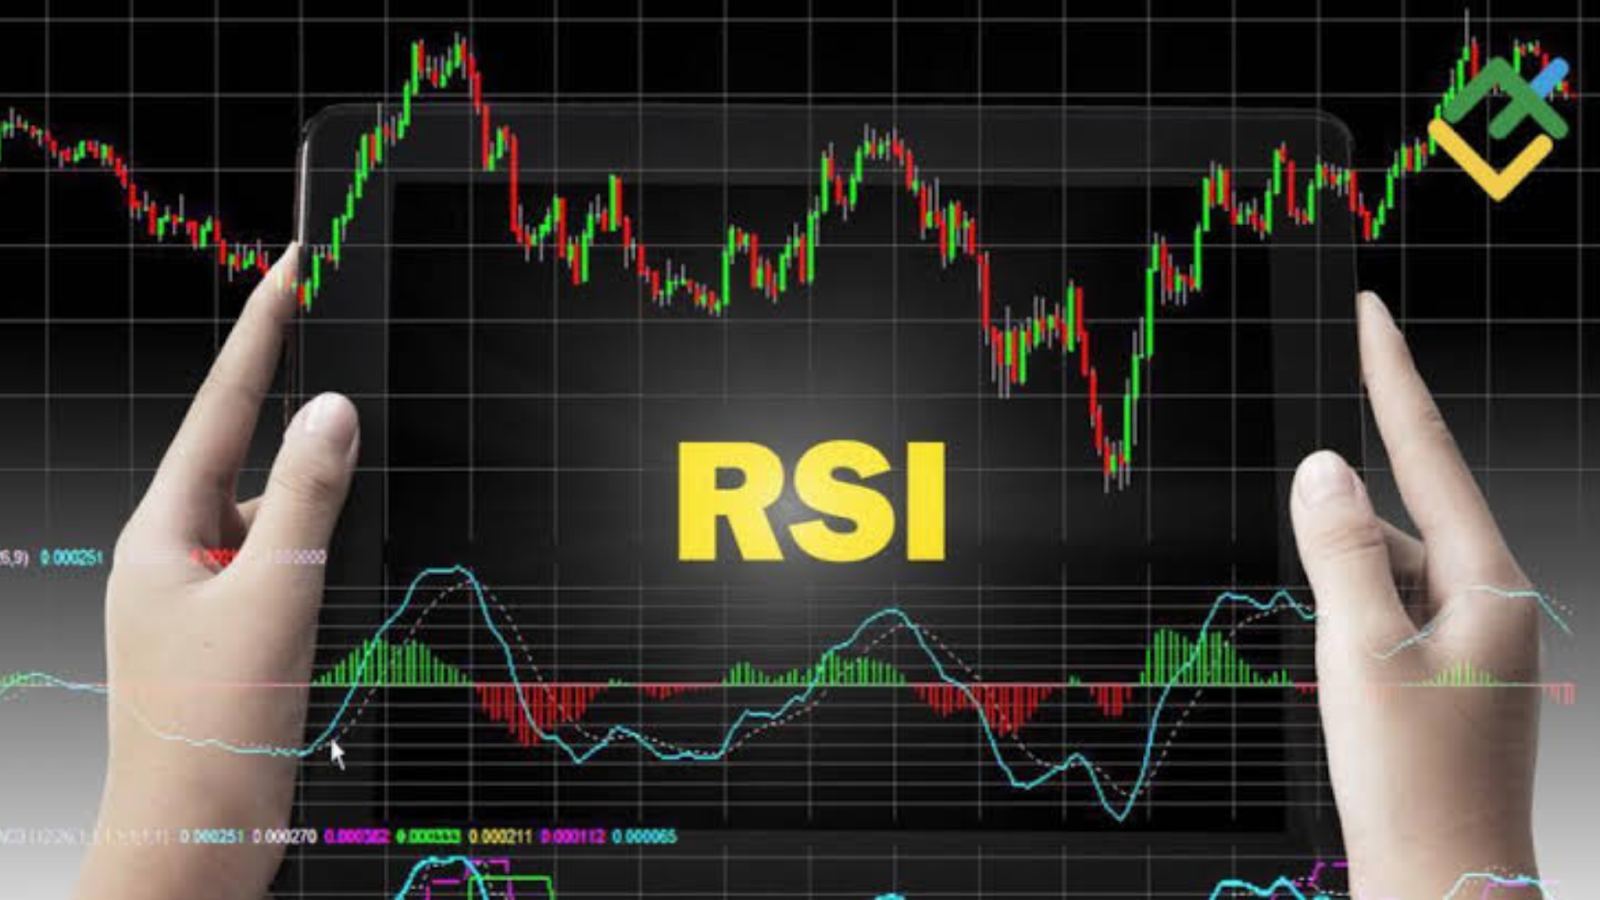 Relative Strength Index (RSI)